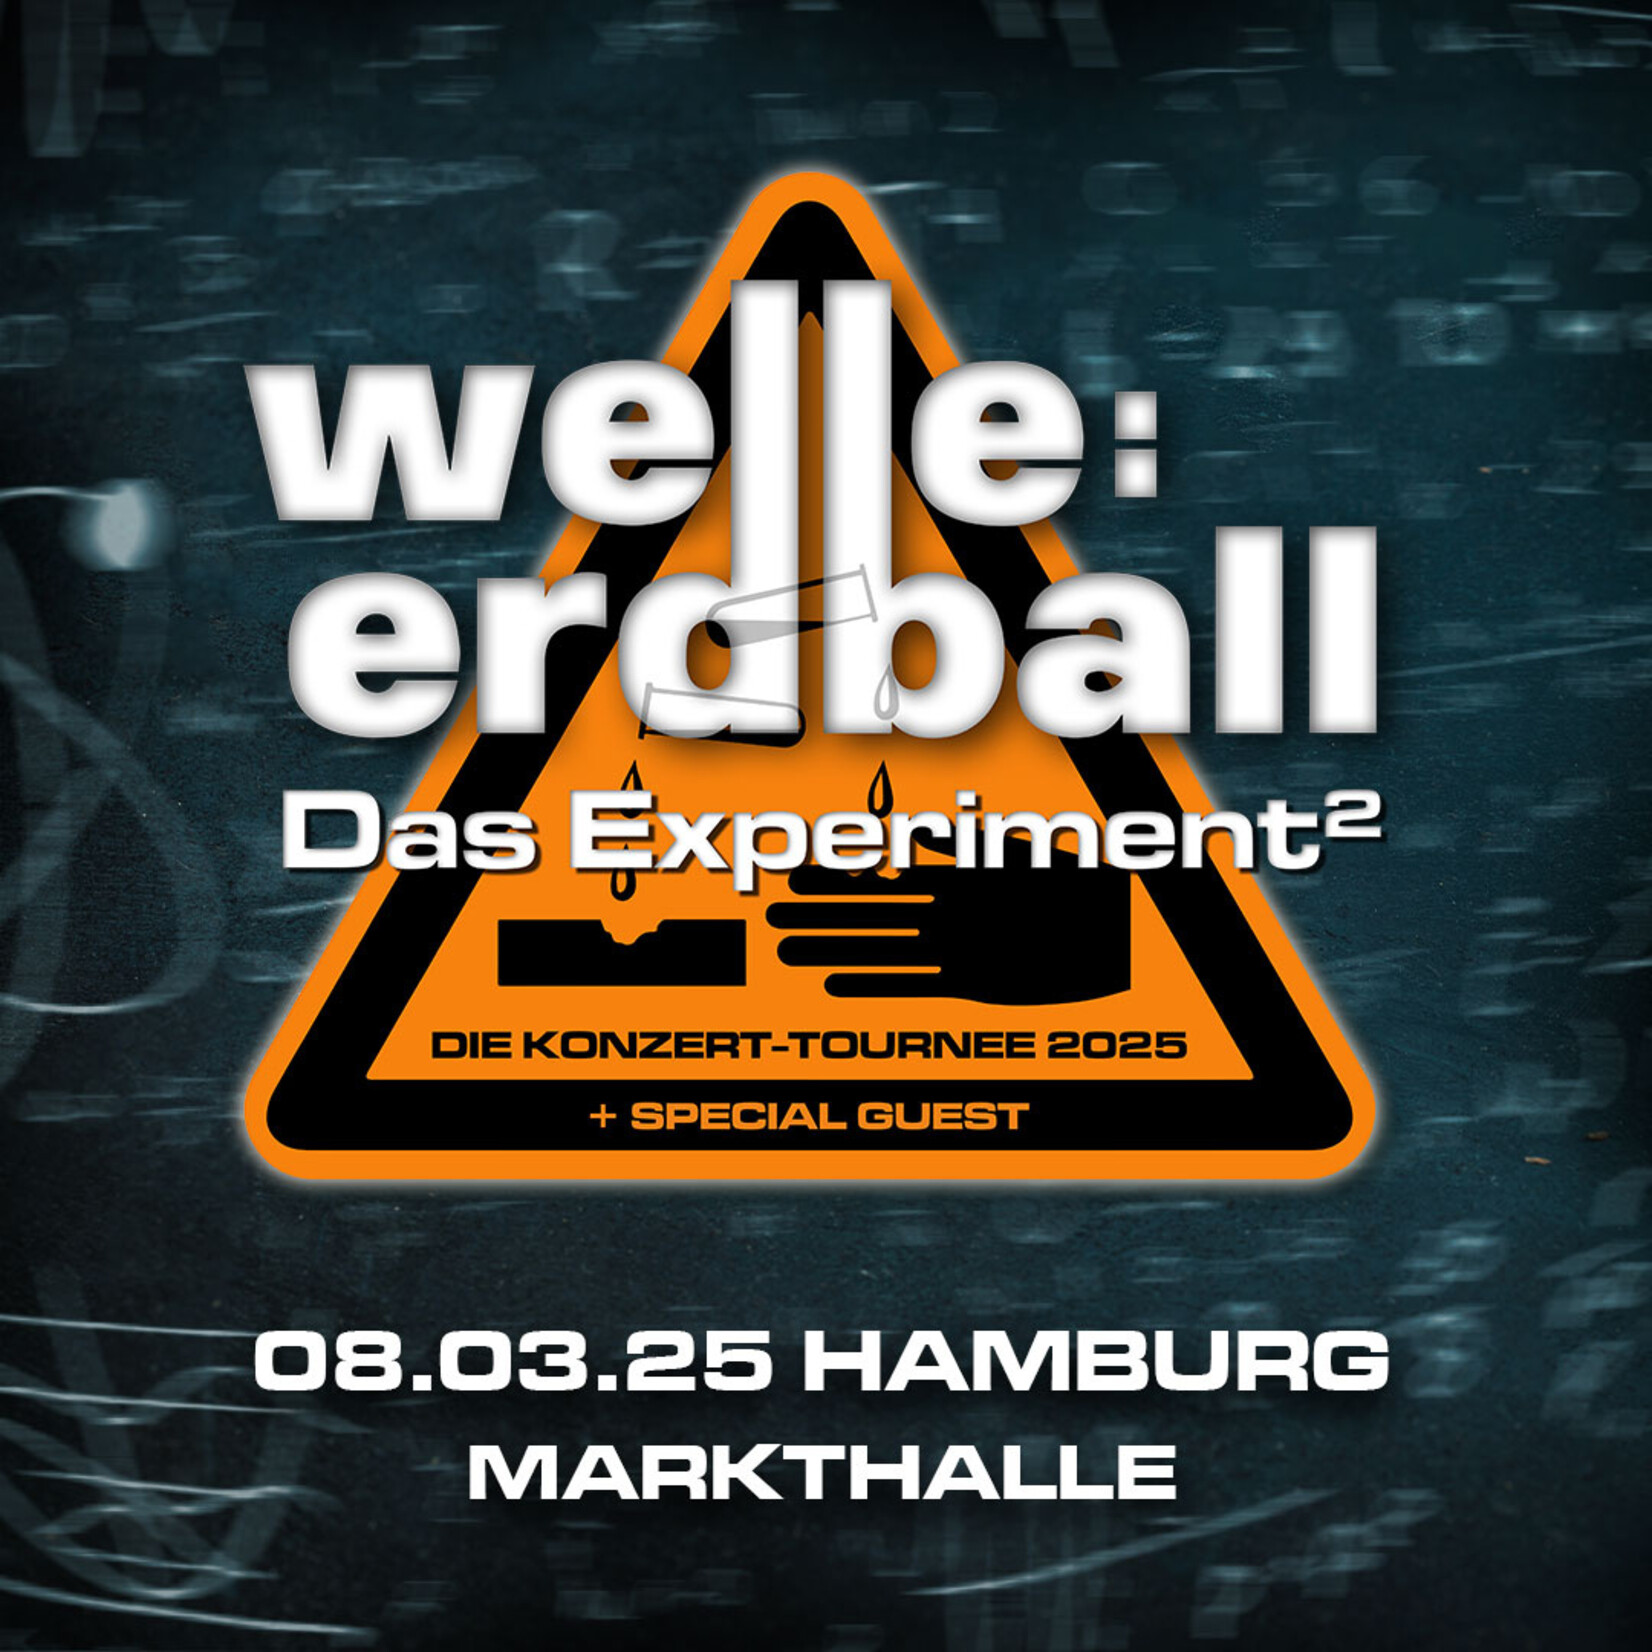 08.03.2025 - HAMBURG - WELLE:ERDBALL - DAS EXPERIMENT²